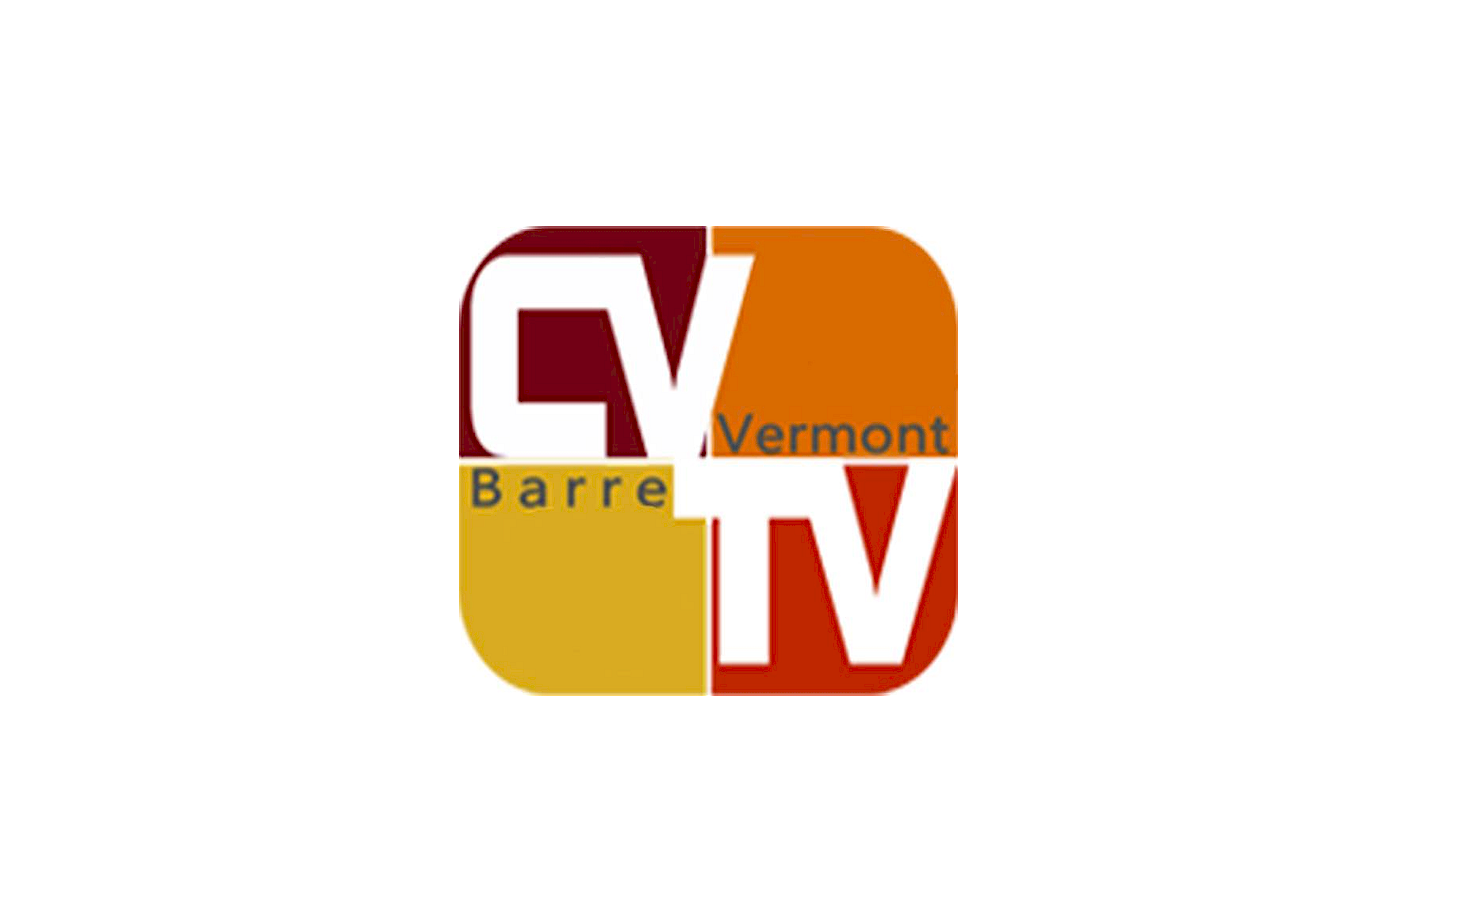 CVTV - Central Vermont Television